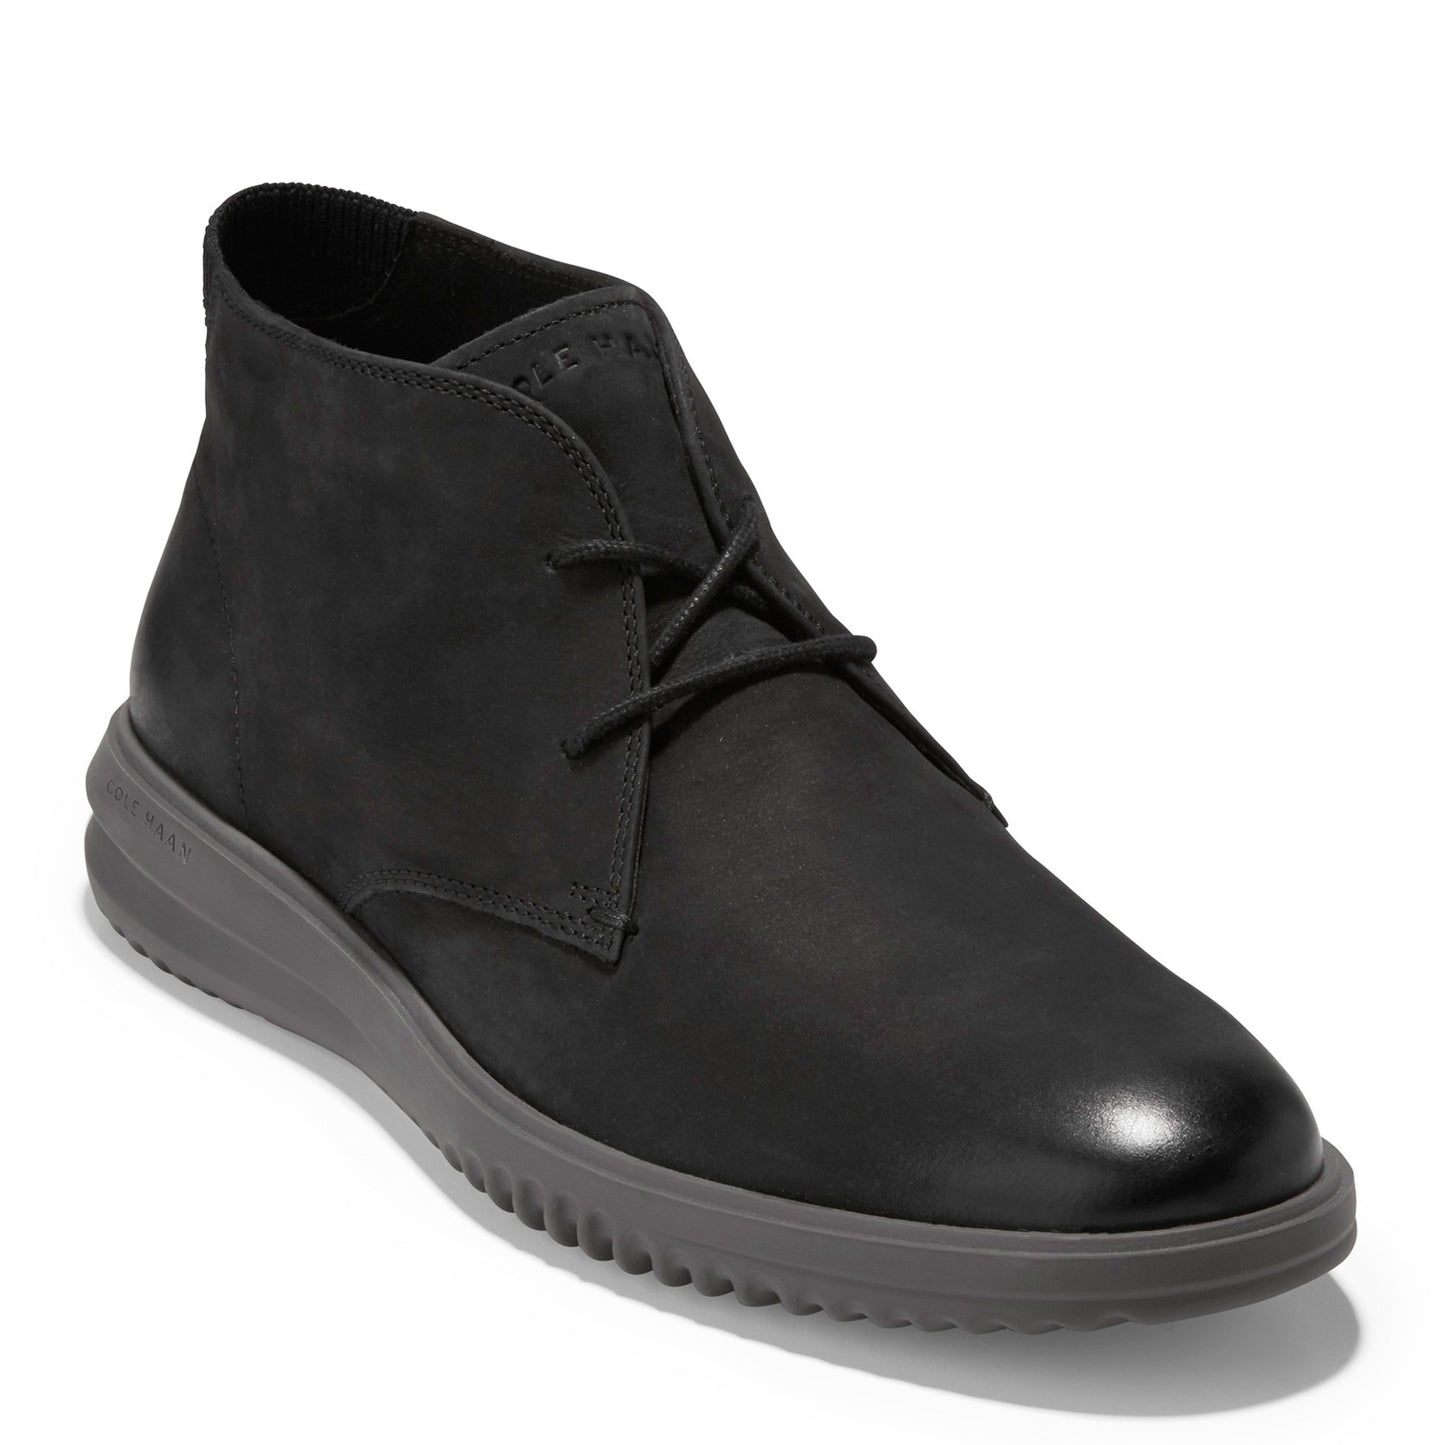 Peltz Shoes  Men's Cole Haan Grand+ Chukka Boot Black/Black C36921